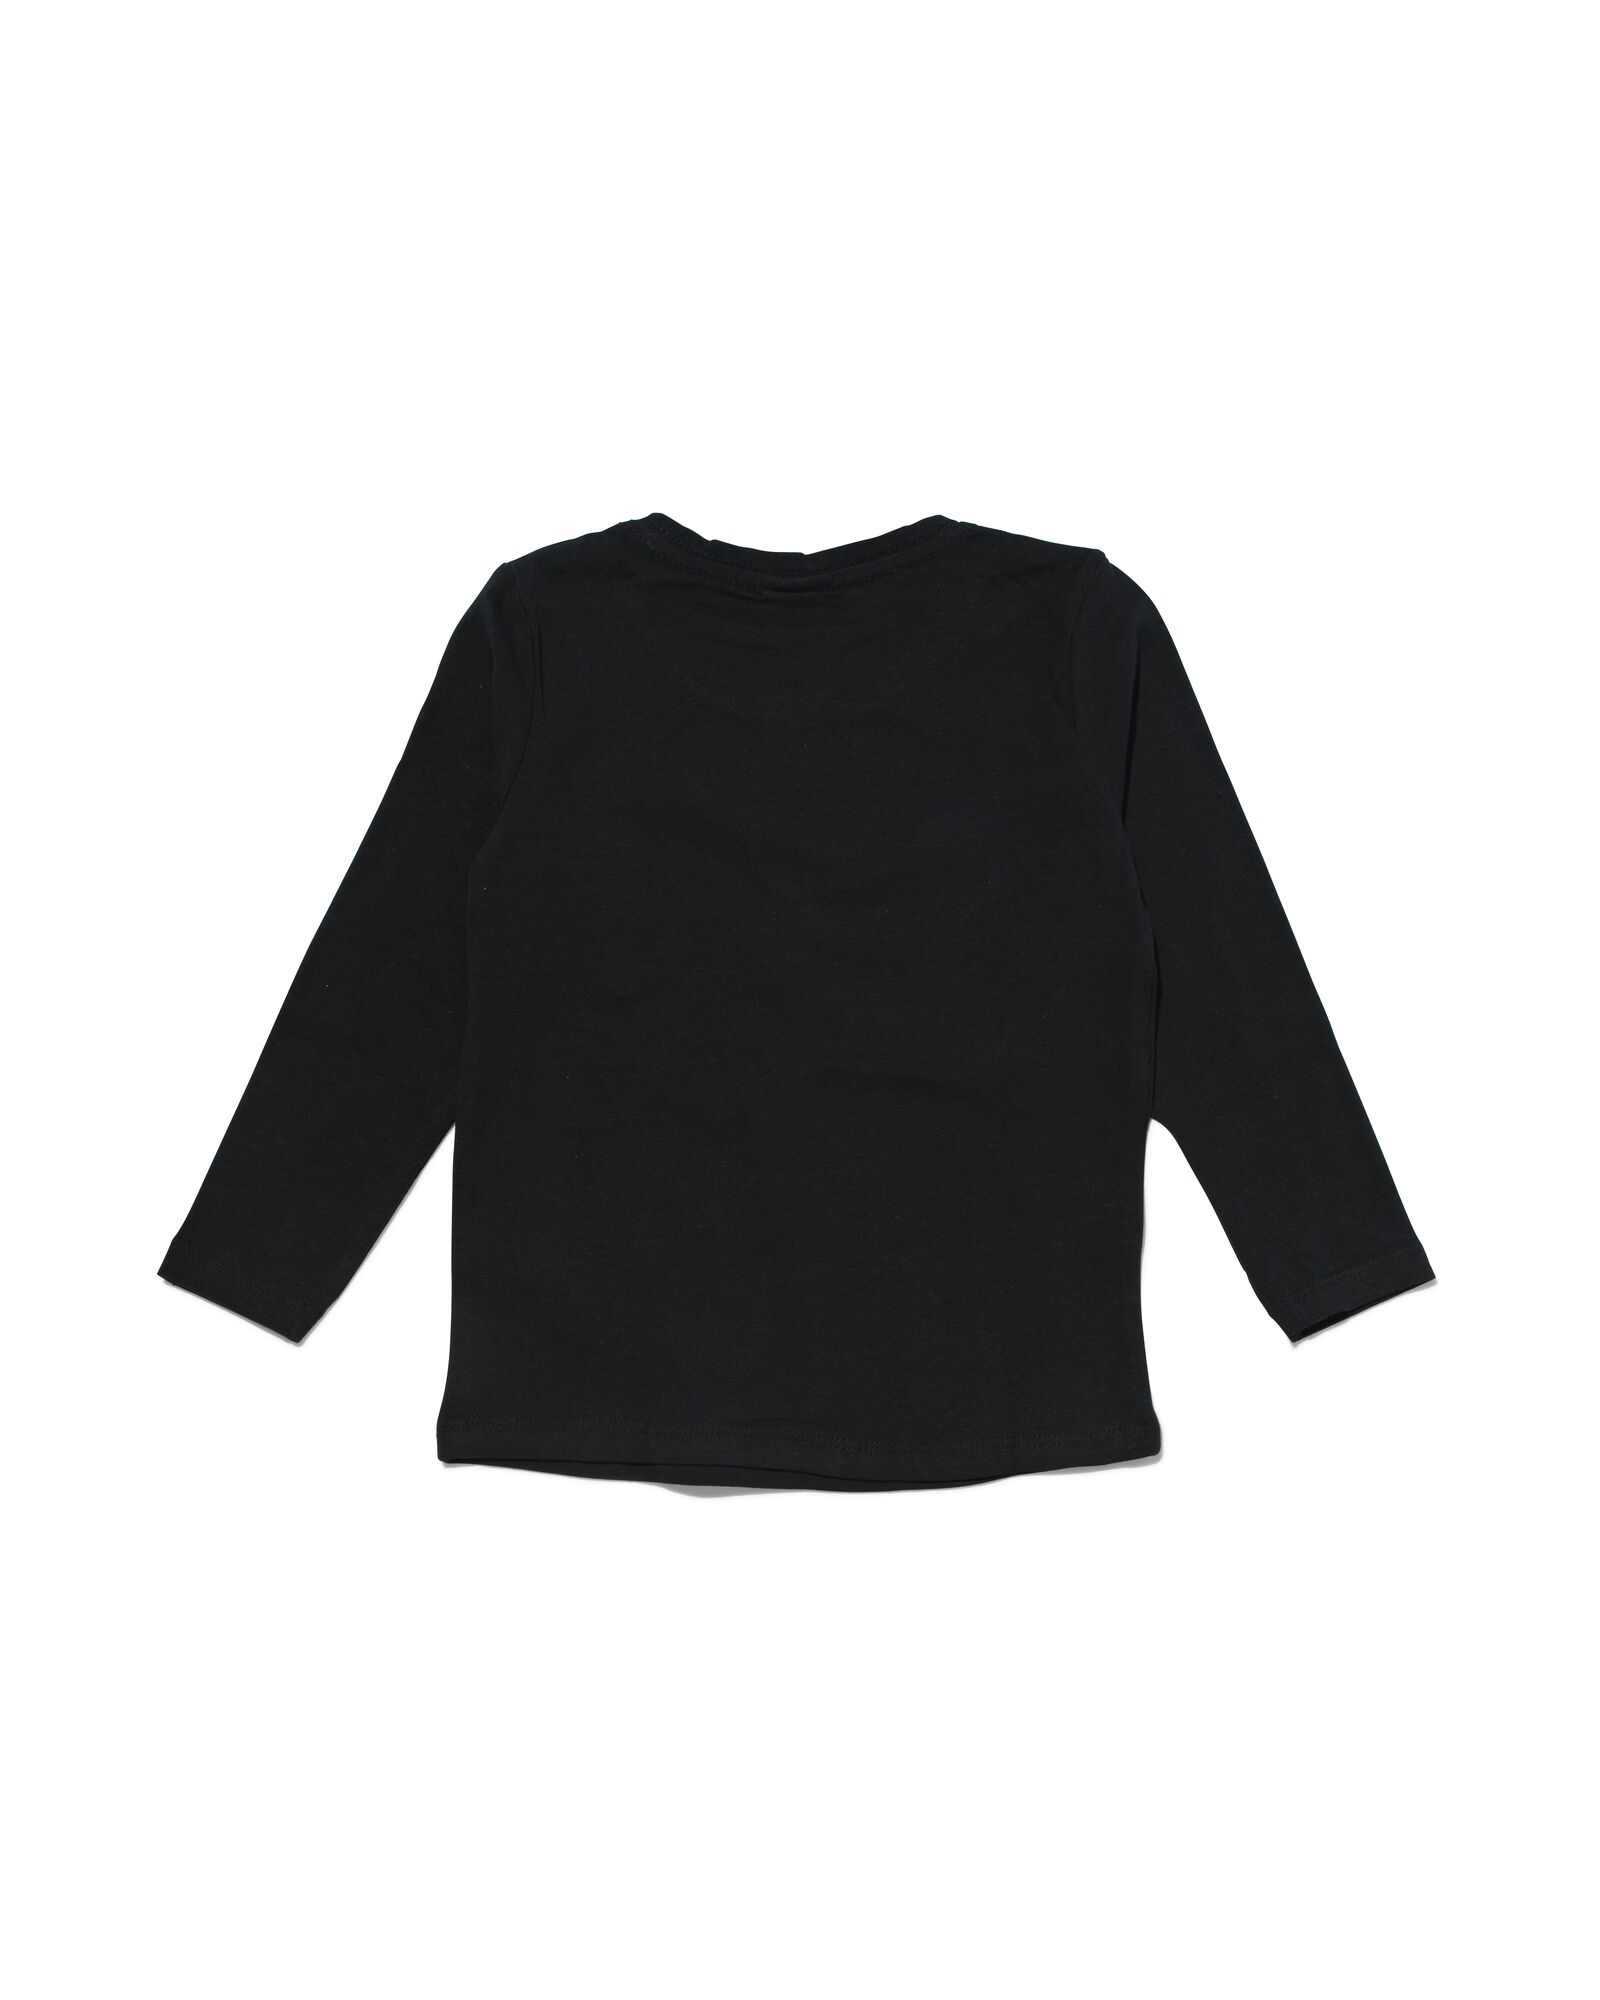 t-shirt enfant noir 98/104 - 30843643 - HEMA